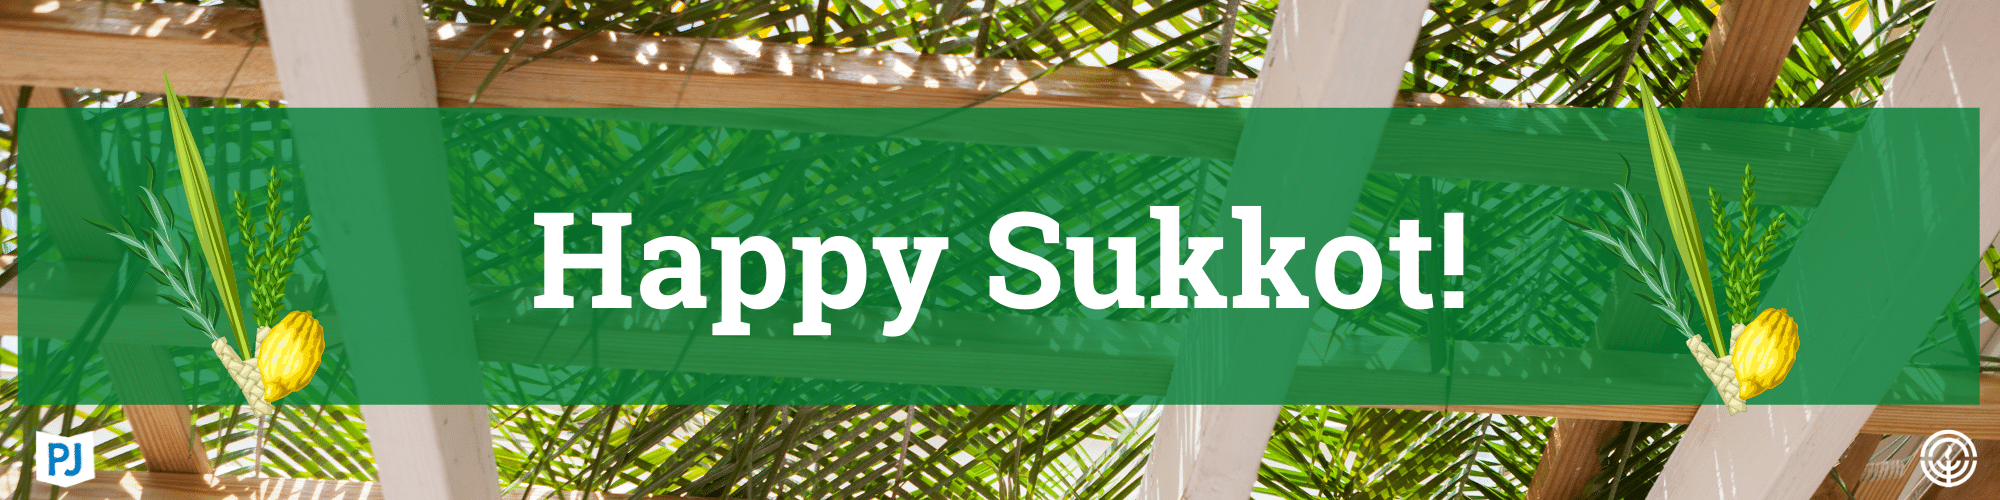 Happy Sukkot header